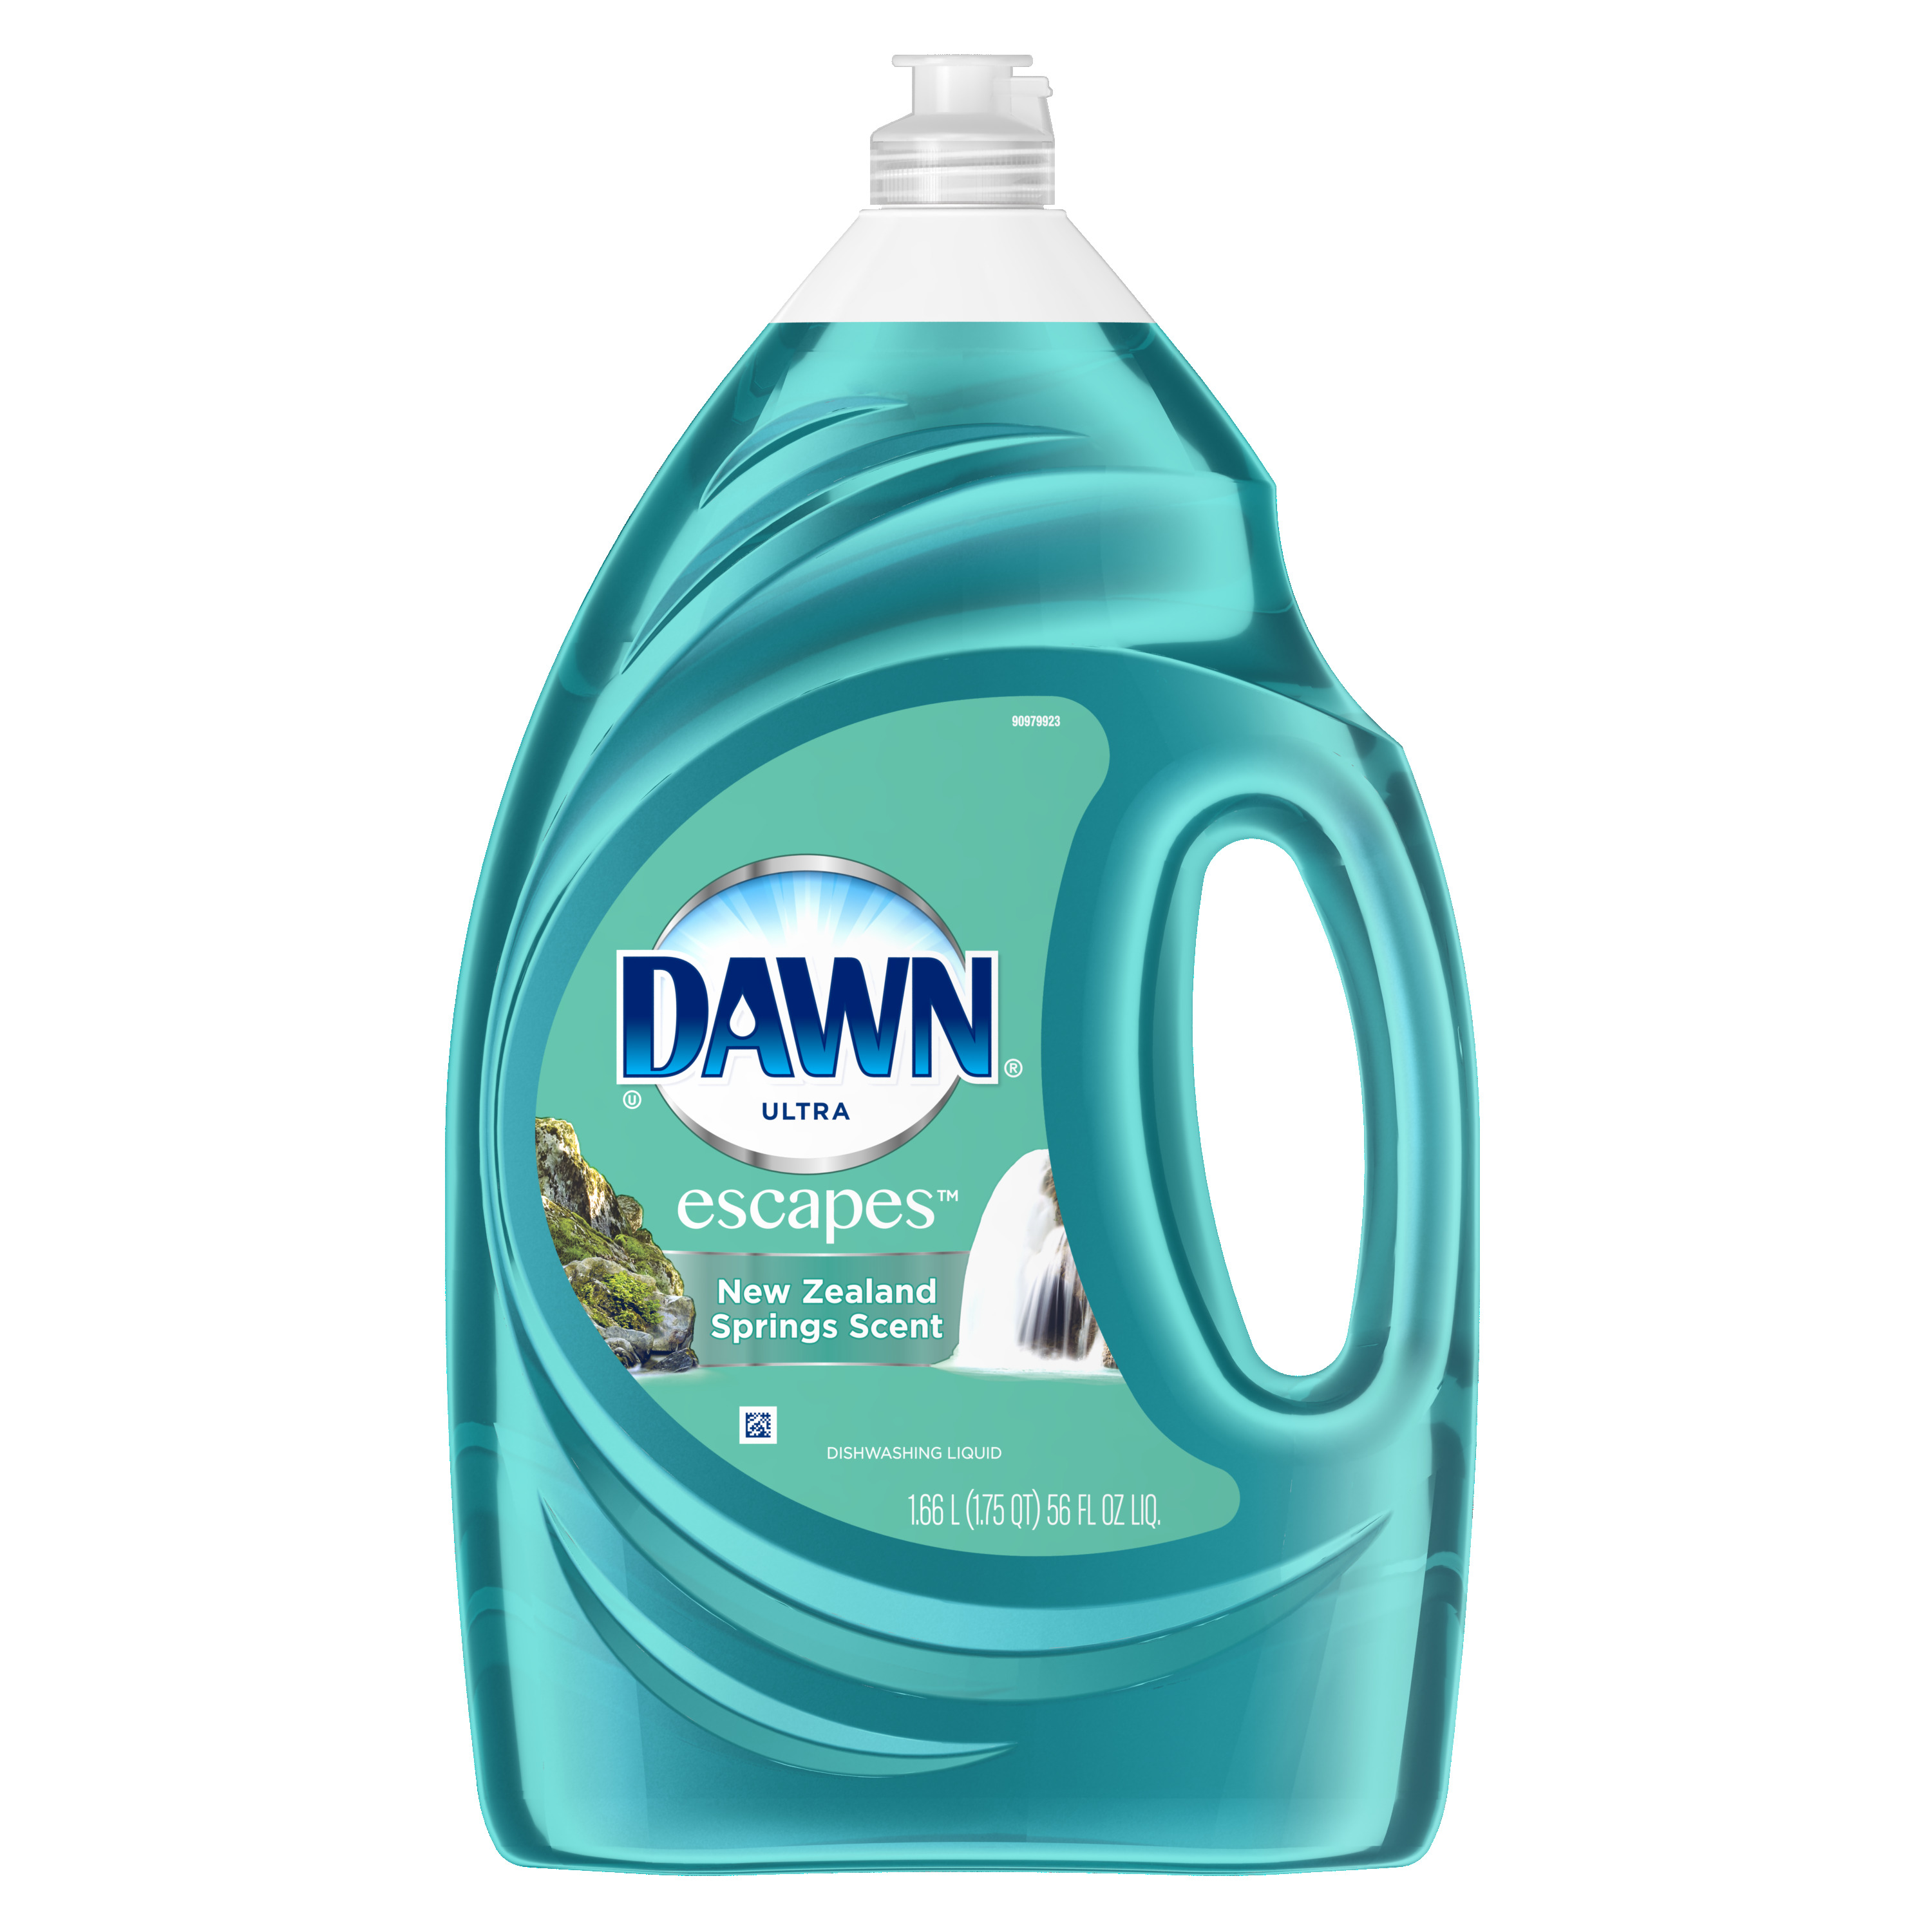 Dawn Escapes Dishwashing Liquid Dish Soap New Zealand Springs, 56 oz - image 1 of 5